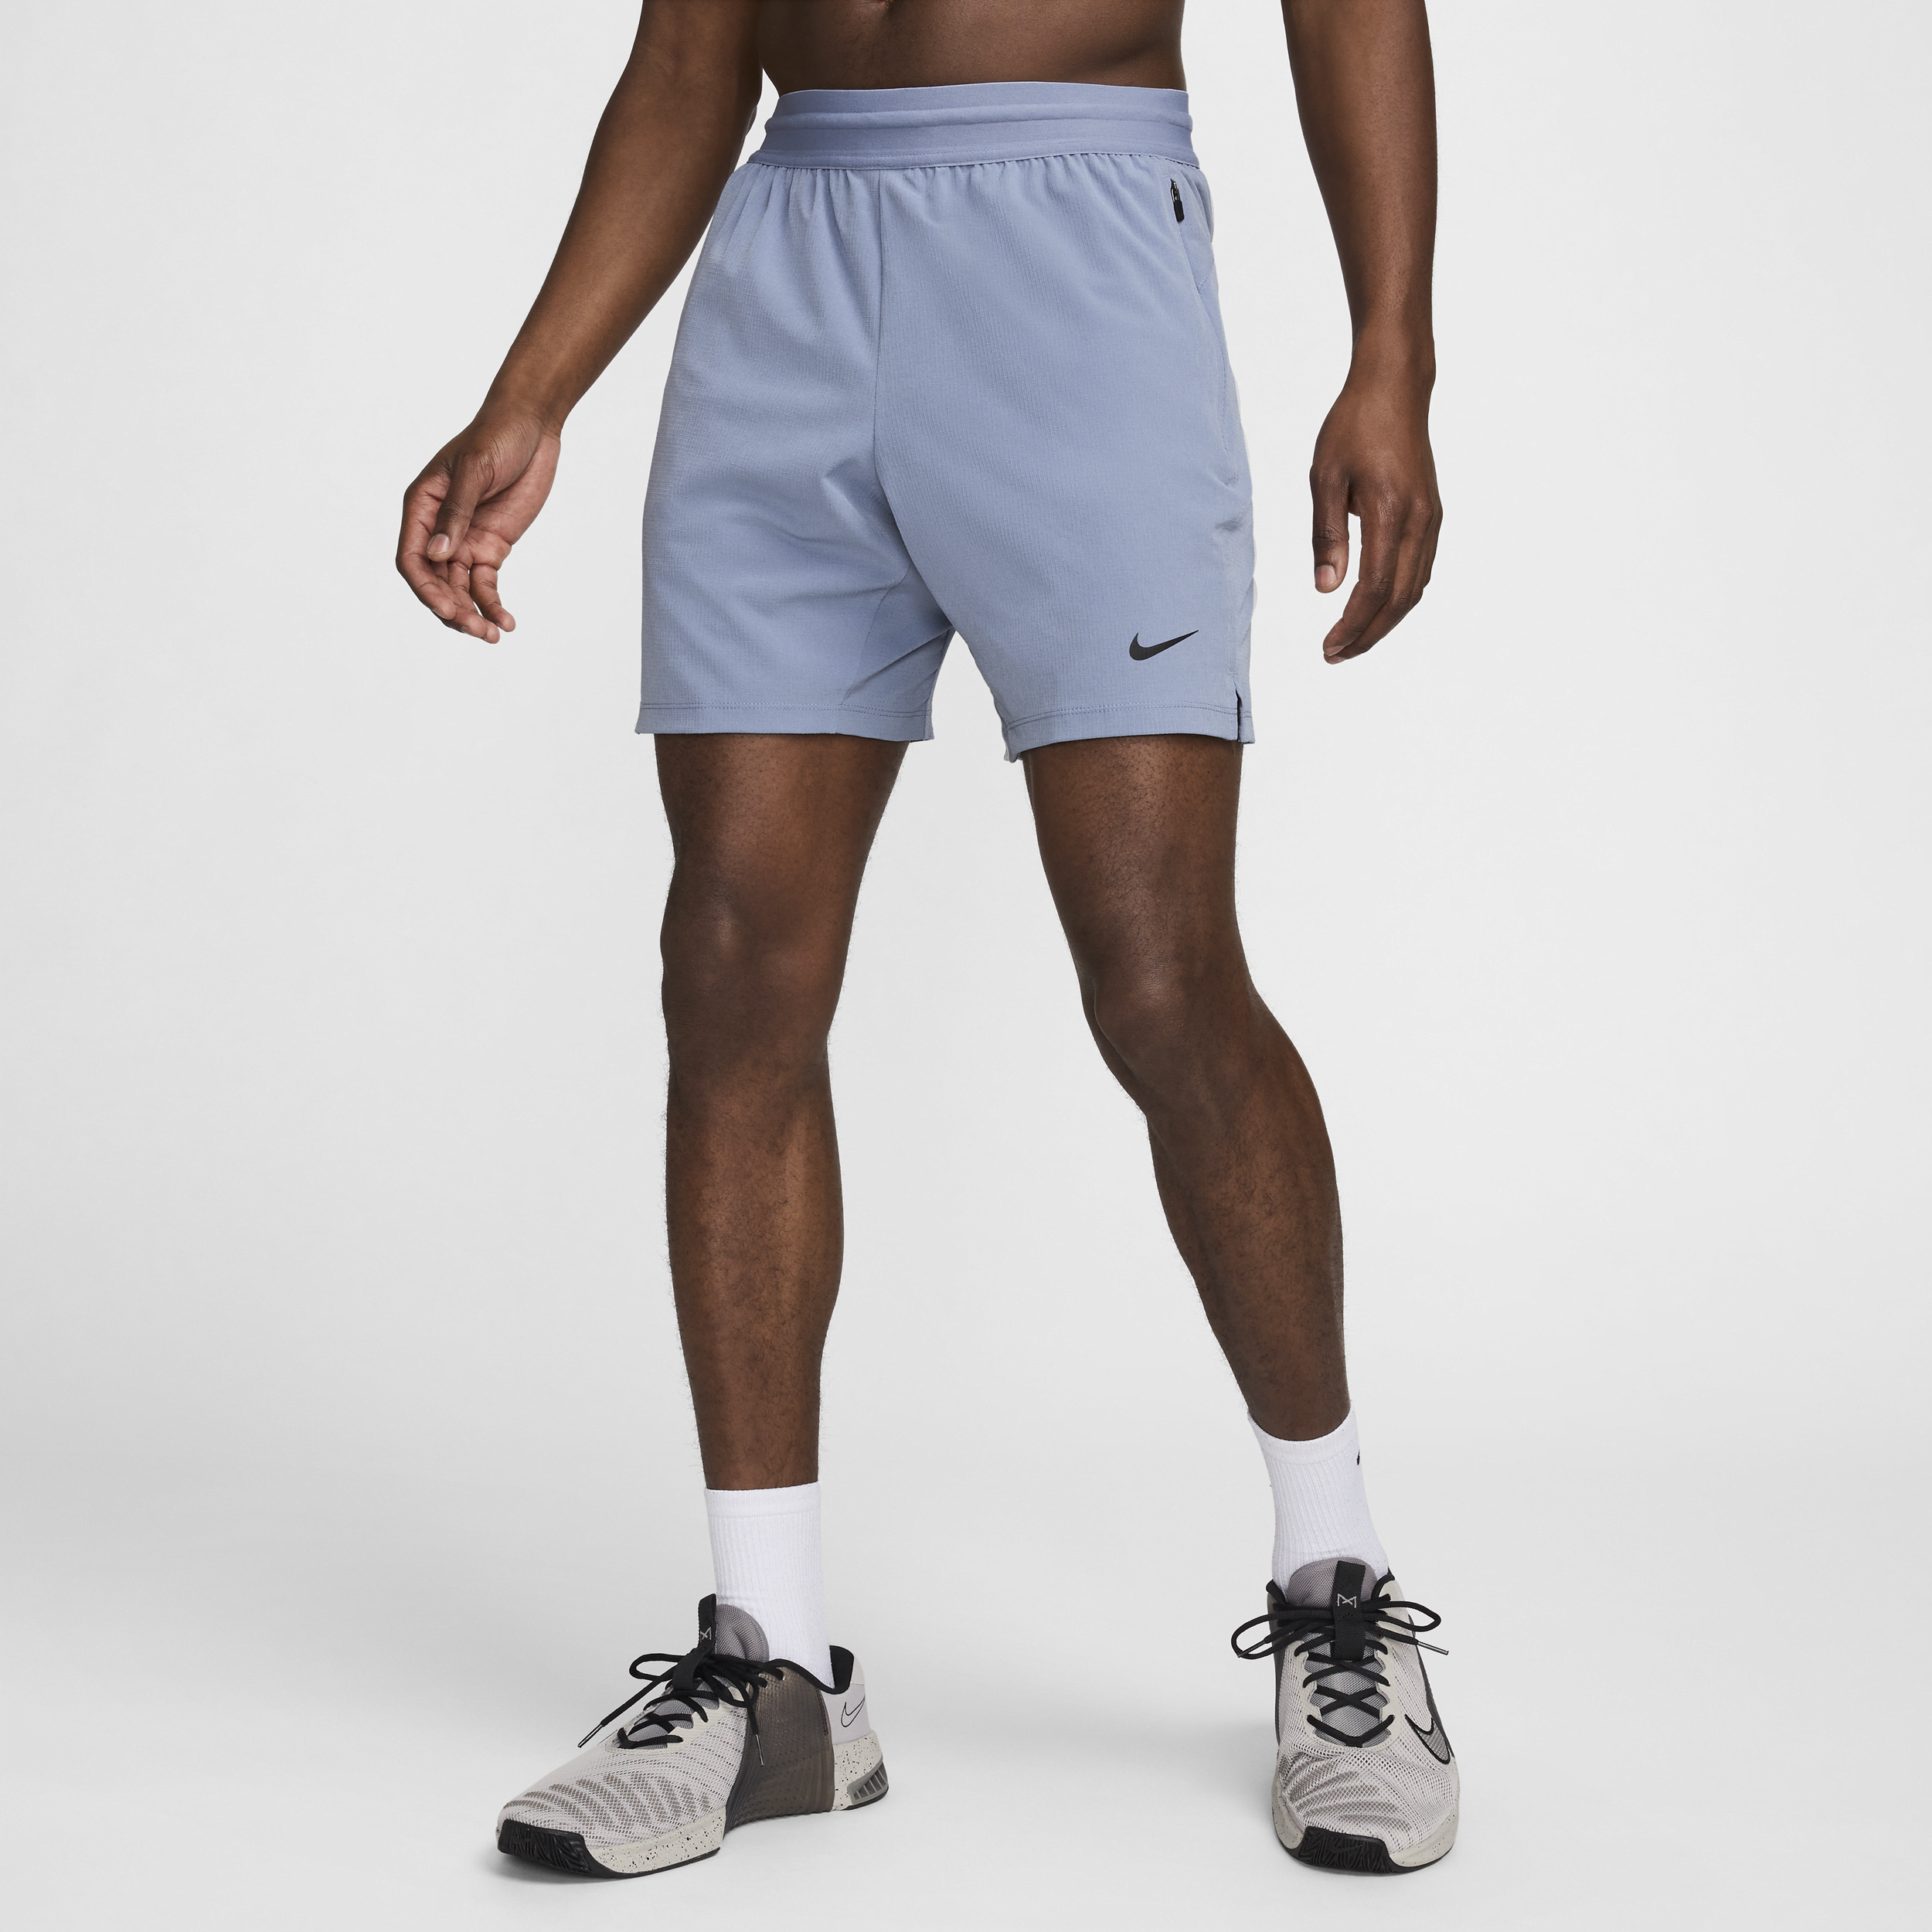 Shorts da fitness Dri-FIT non foderati 18 cm Nike Flex Rep 4.0 – Uomo - Blu